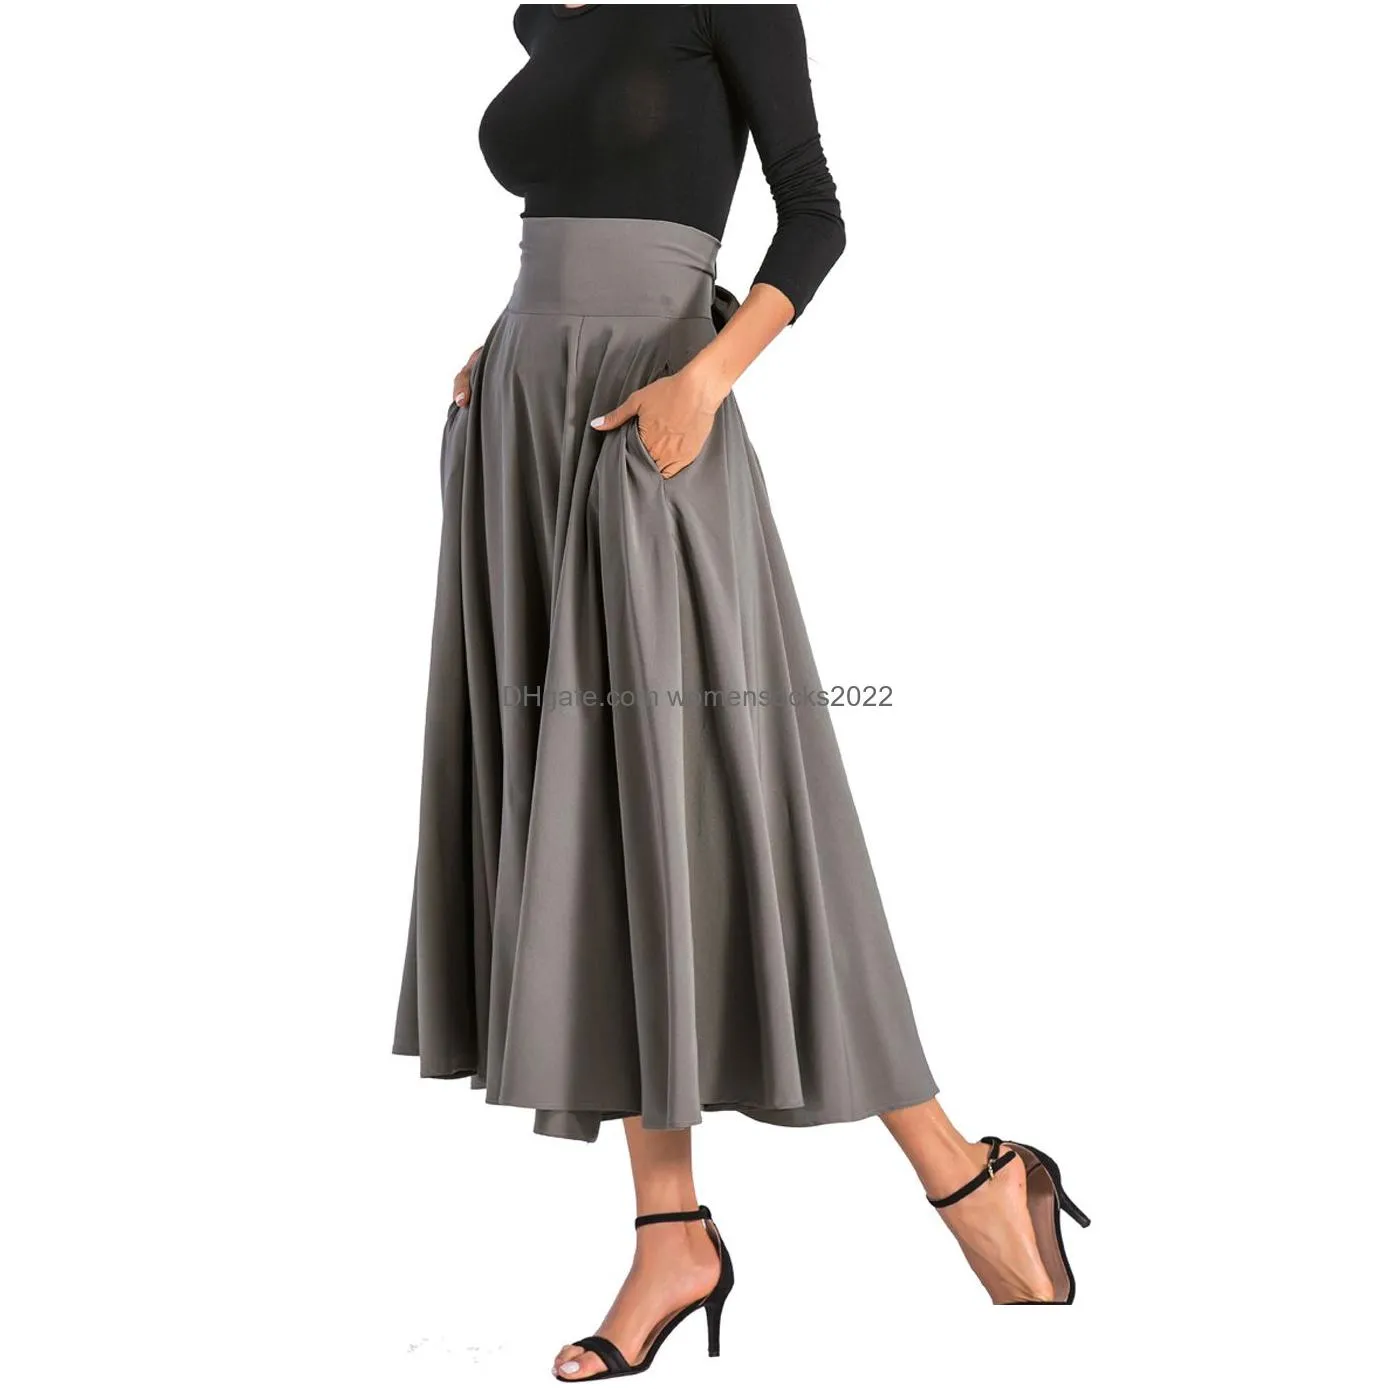 women long skirt high waist retro vintage swing elegant pleated belted rockabilly maxi skirt with pockets